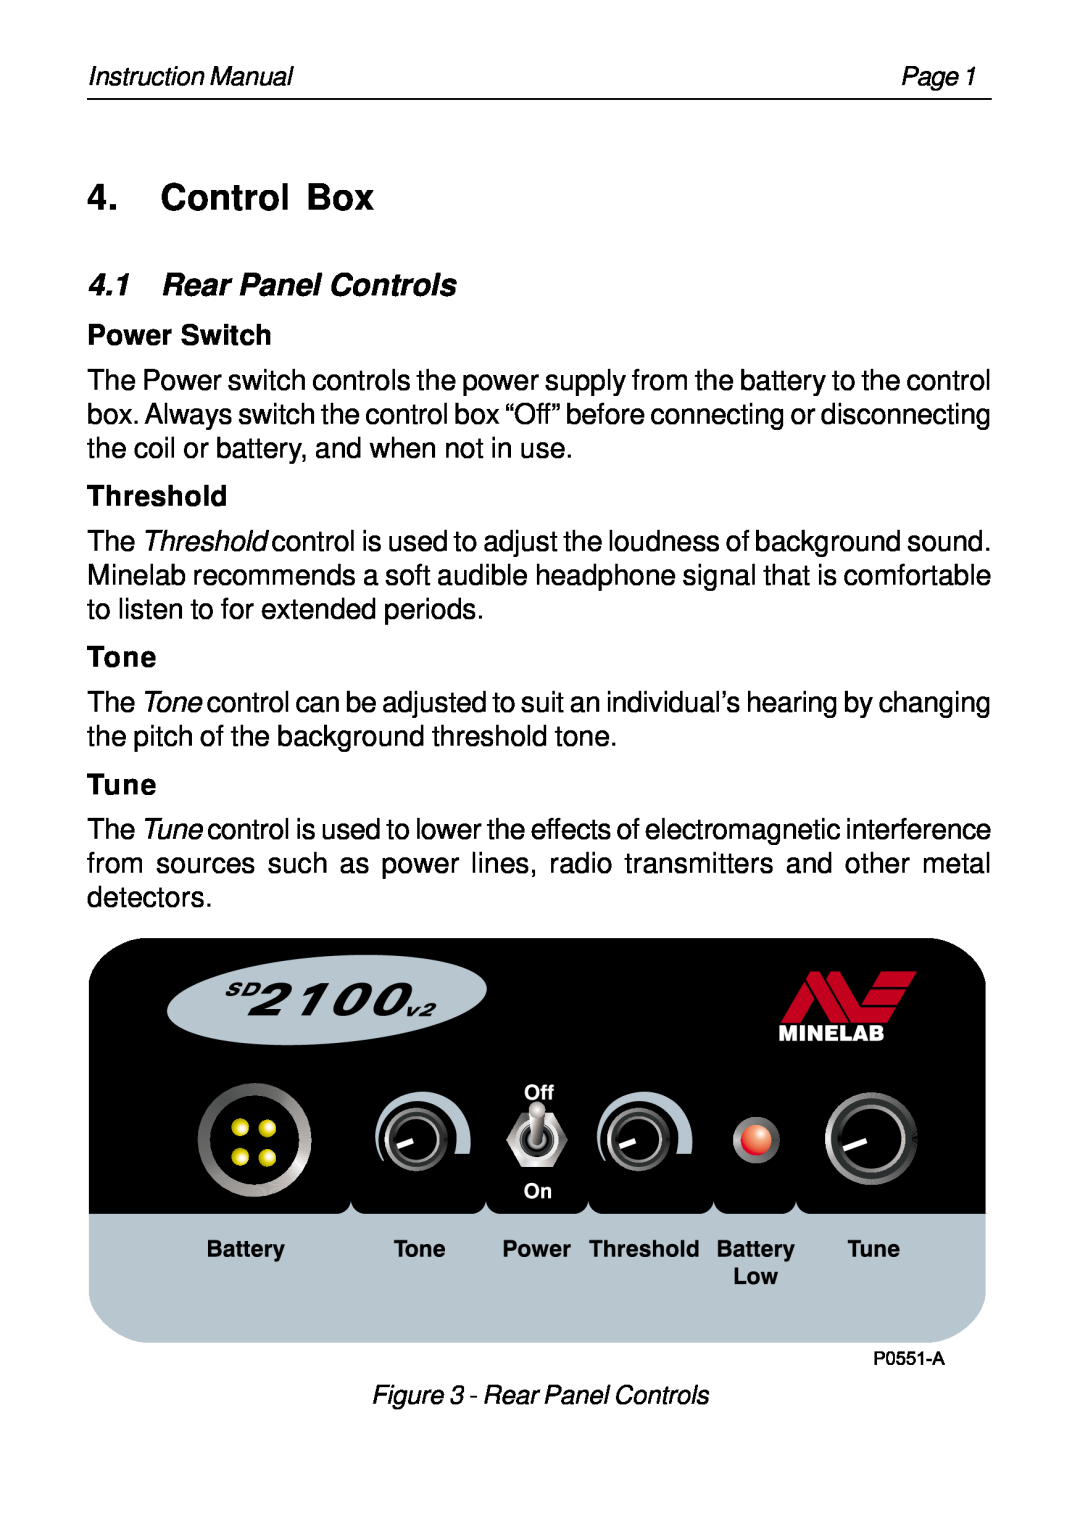 Minelab SD2100v2 instruction manual Control Box, Rear Panel Controls, Power Switch, Threshold, Tone, Tune 